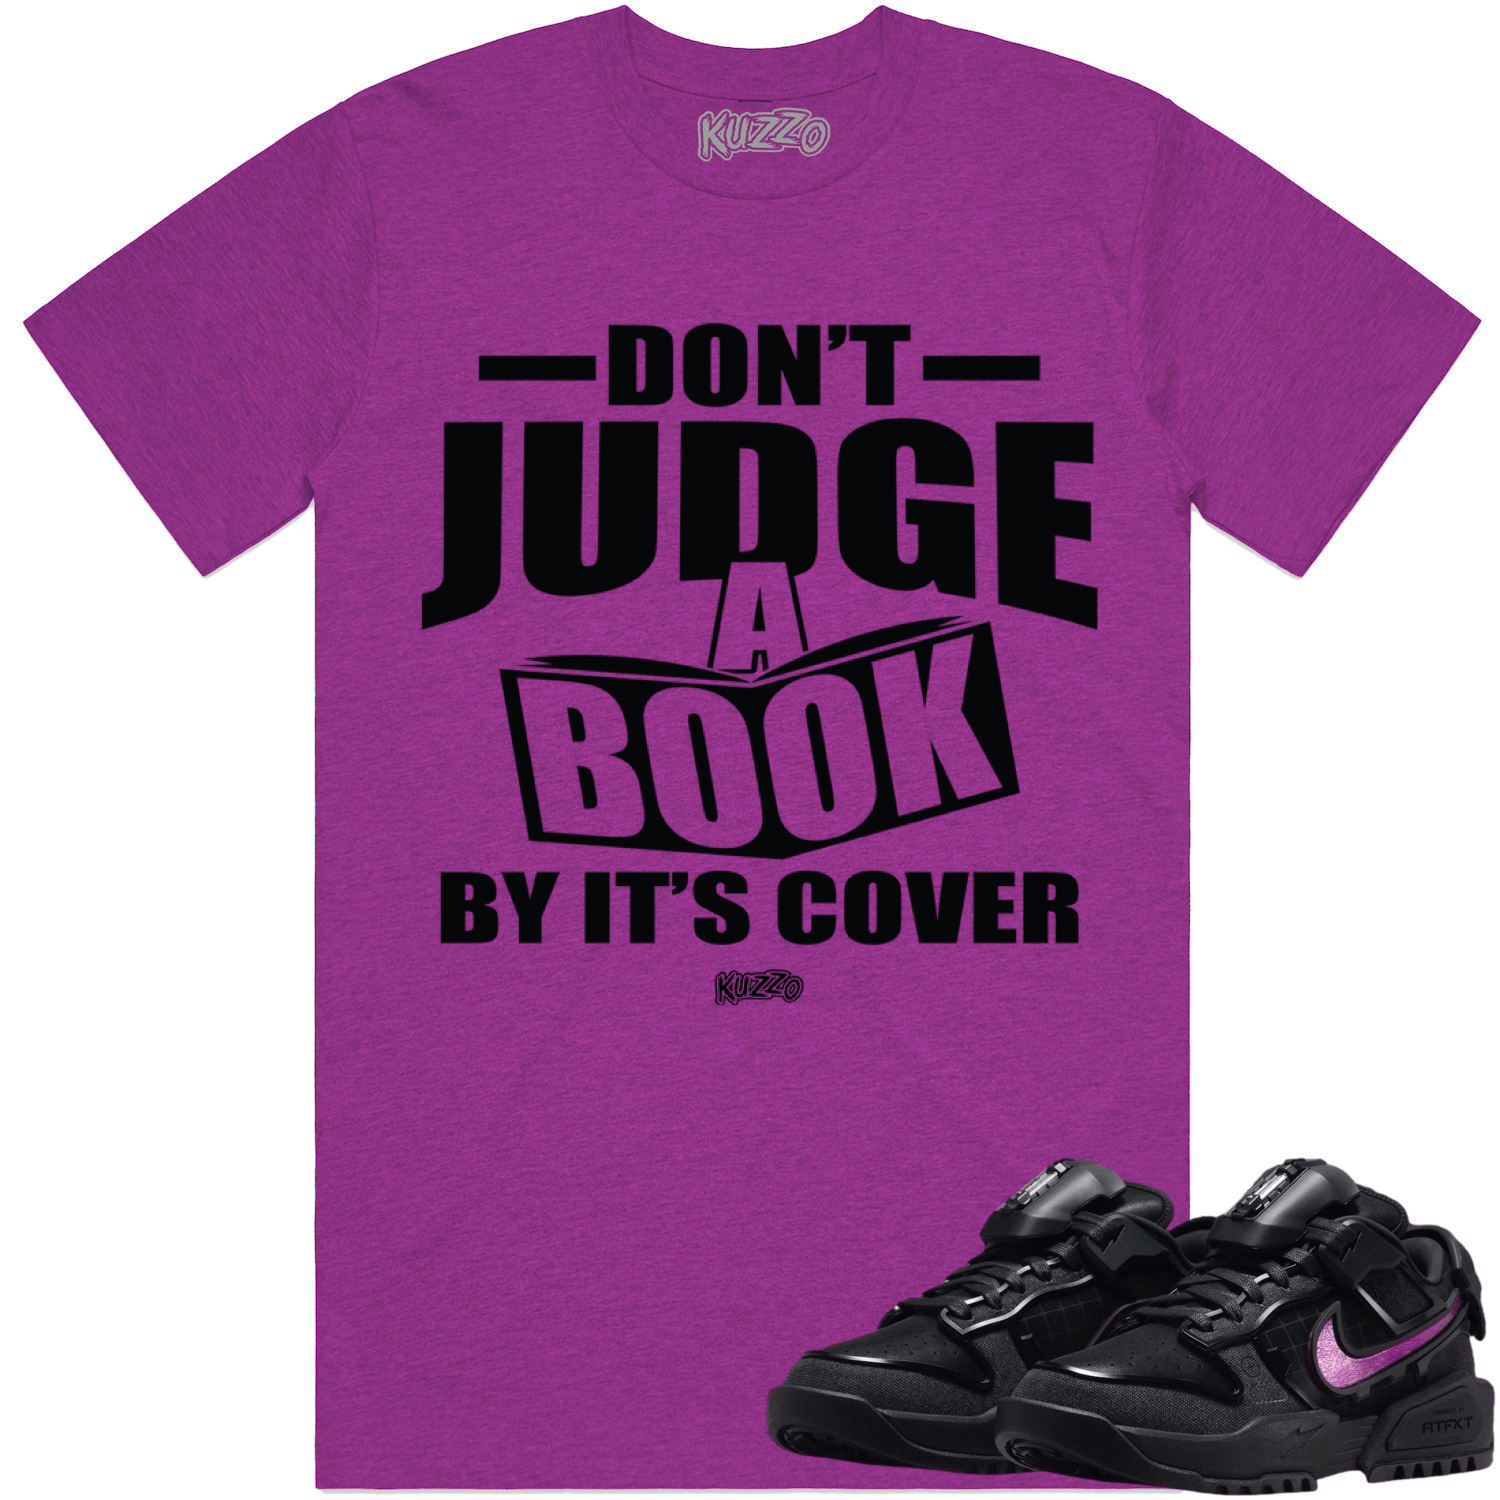 RTFKT Dunk Void Shirt - Sneaker Tees - Judge Book